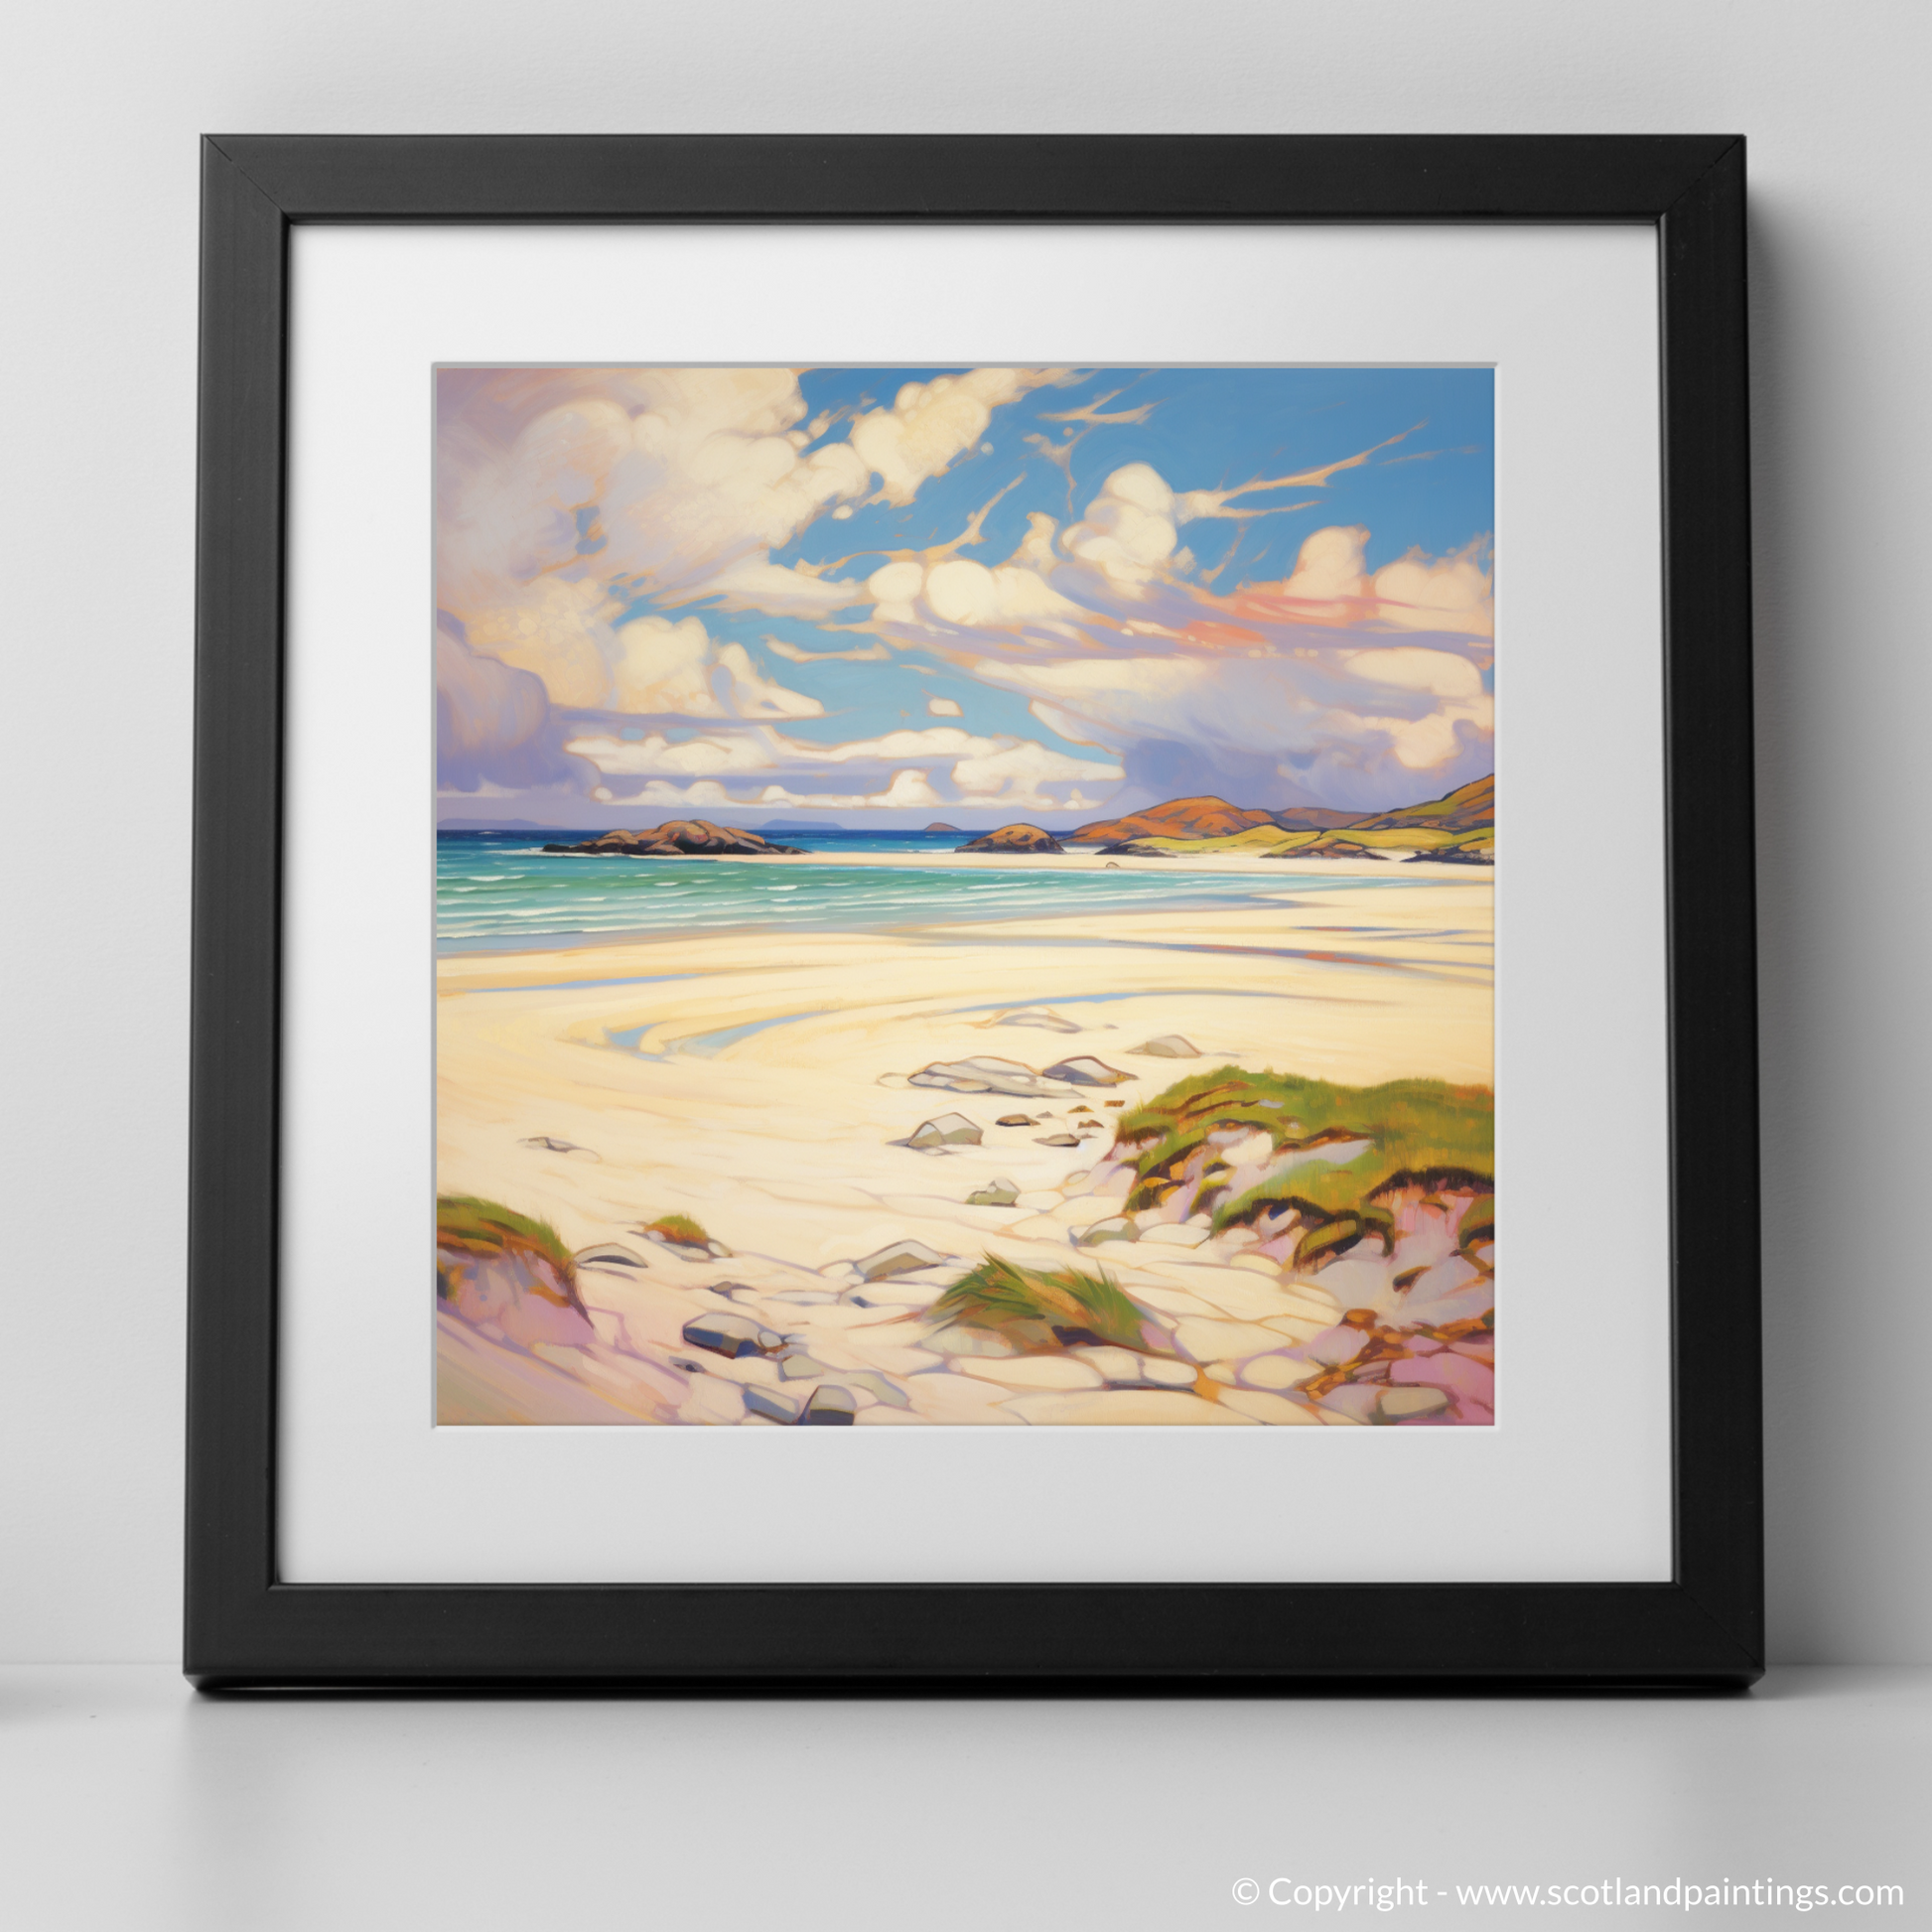 Art Print of Luskentyre Sands, Isle of Lewis in summer with a black frame